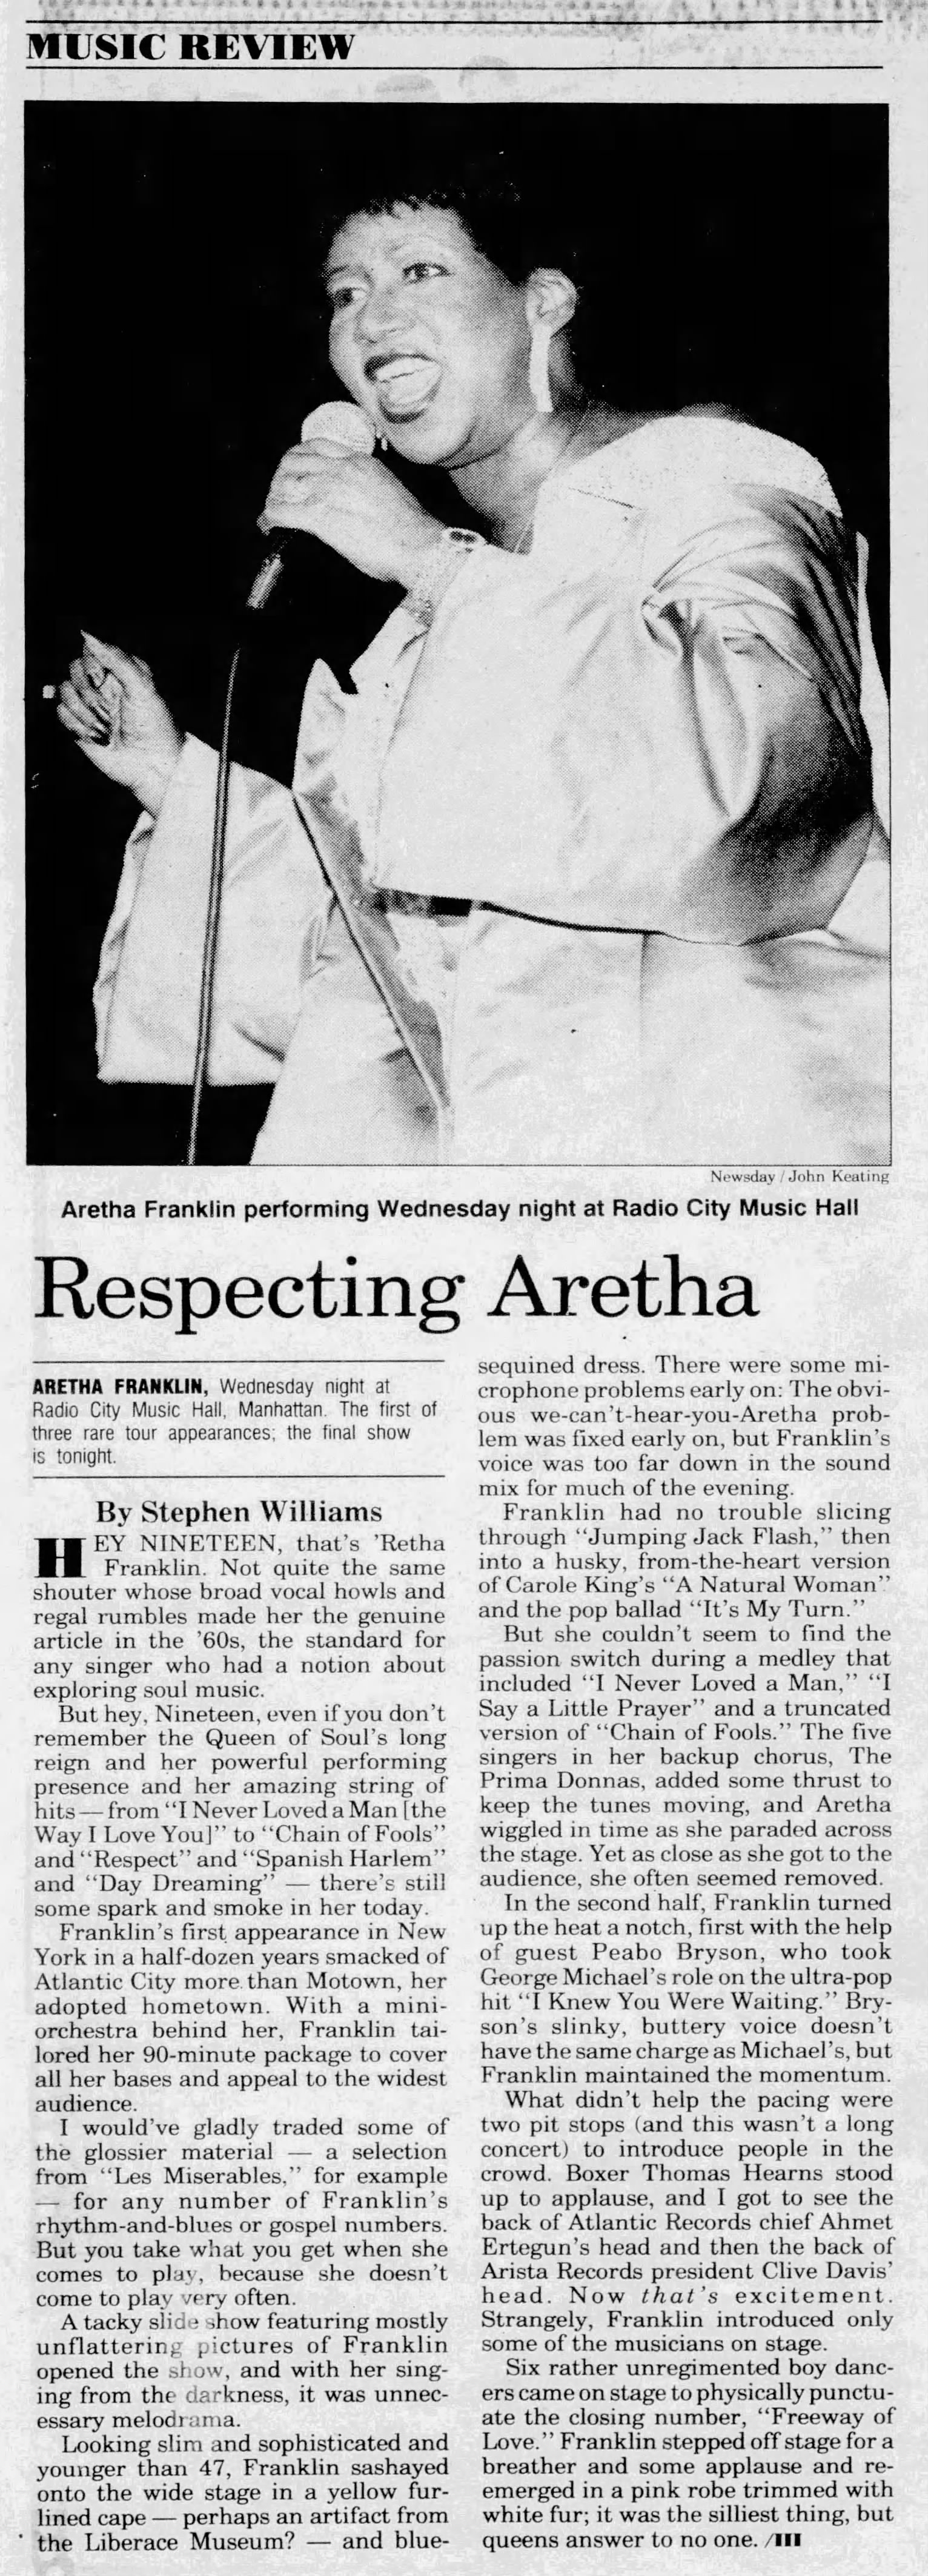 ArethaFranklin1989-07-06RadioCityMusicHallNYC (10).jpg